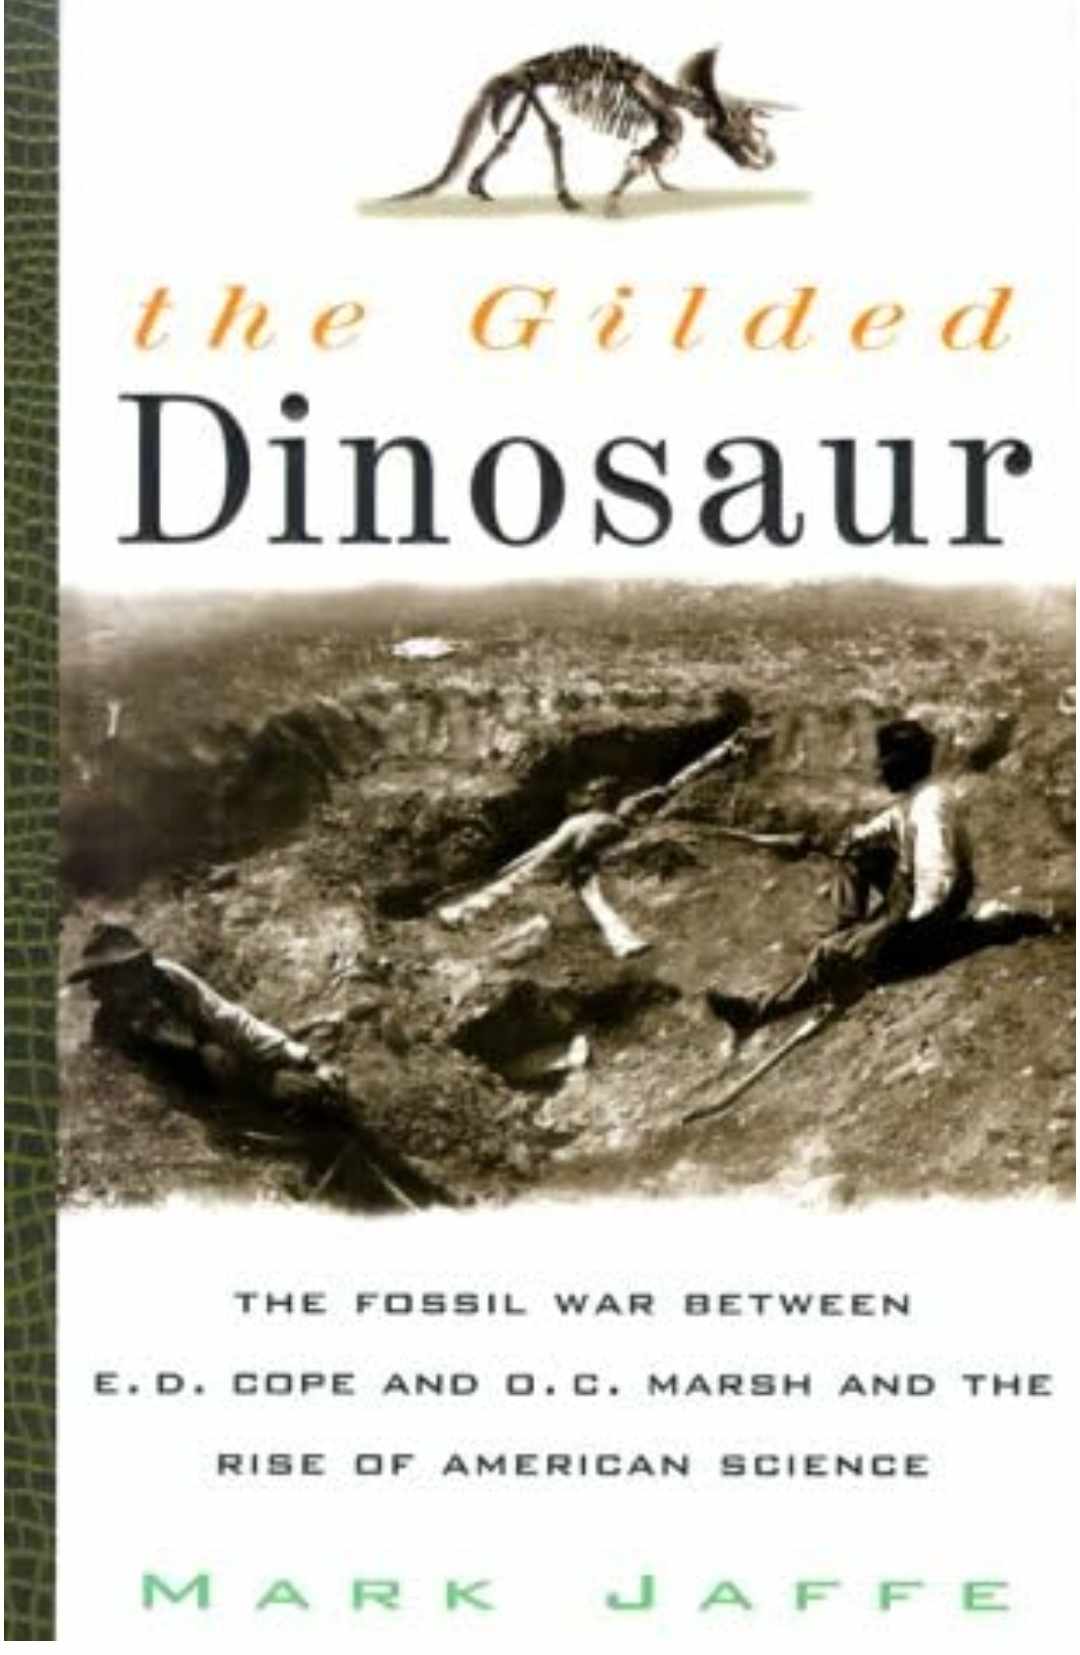 The Gilded Dinosaur by Mark Jaffe